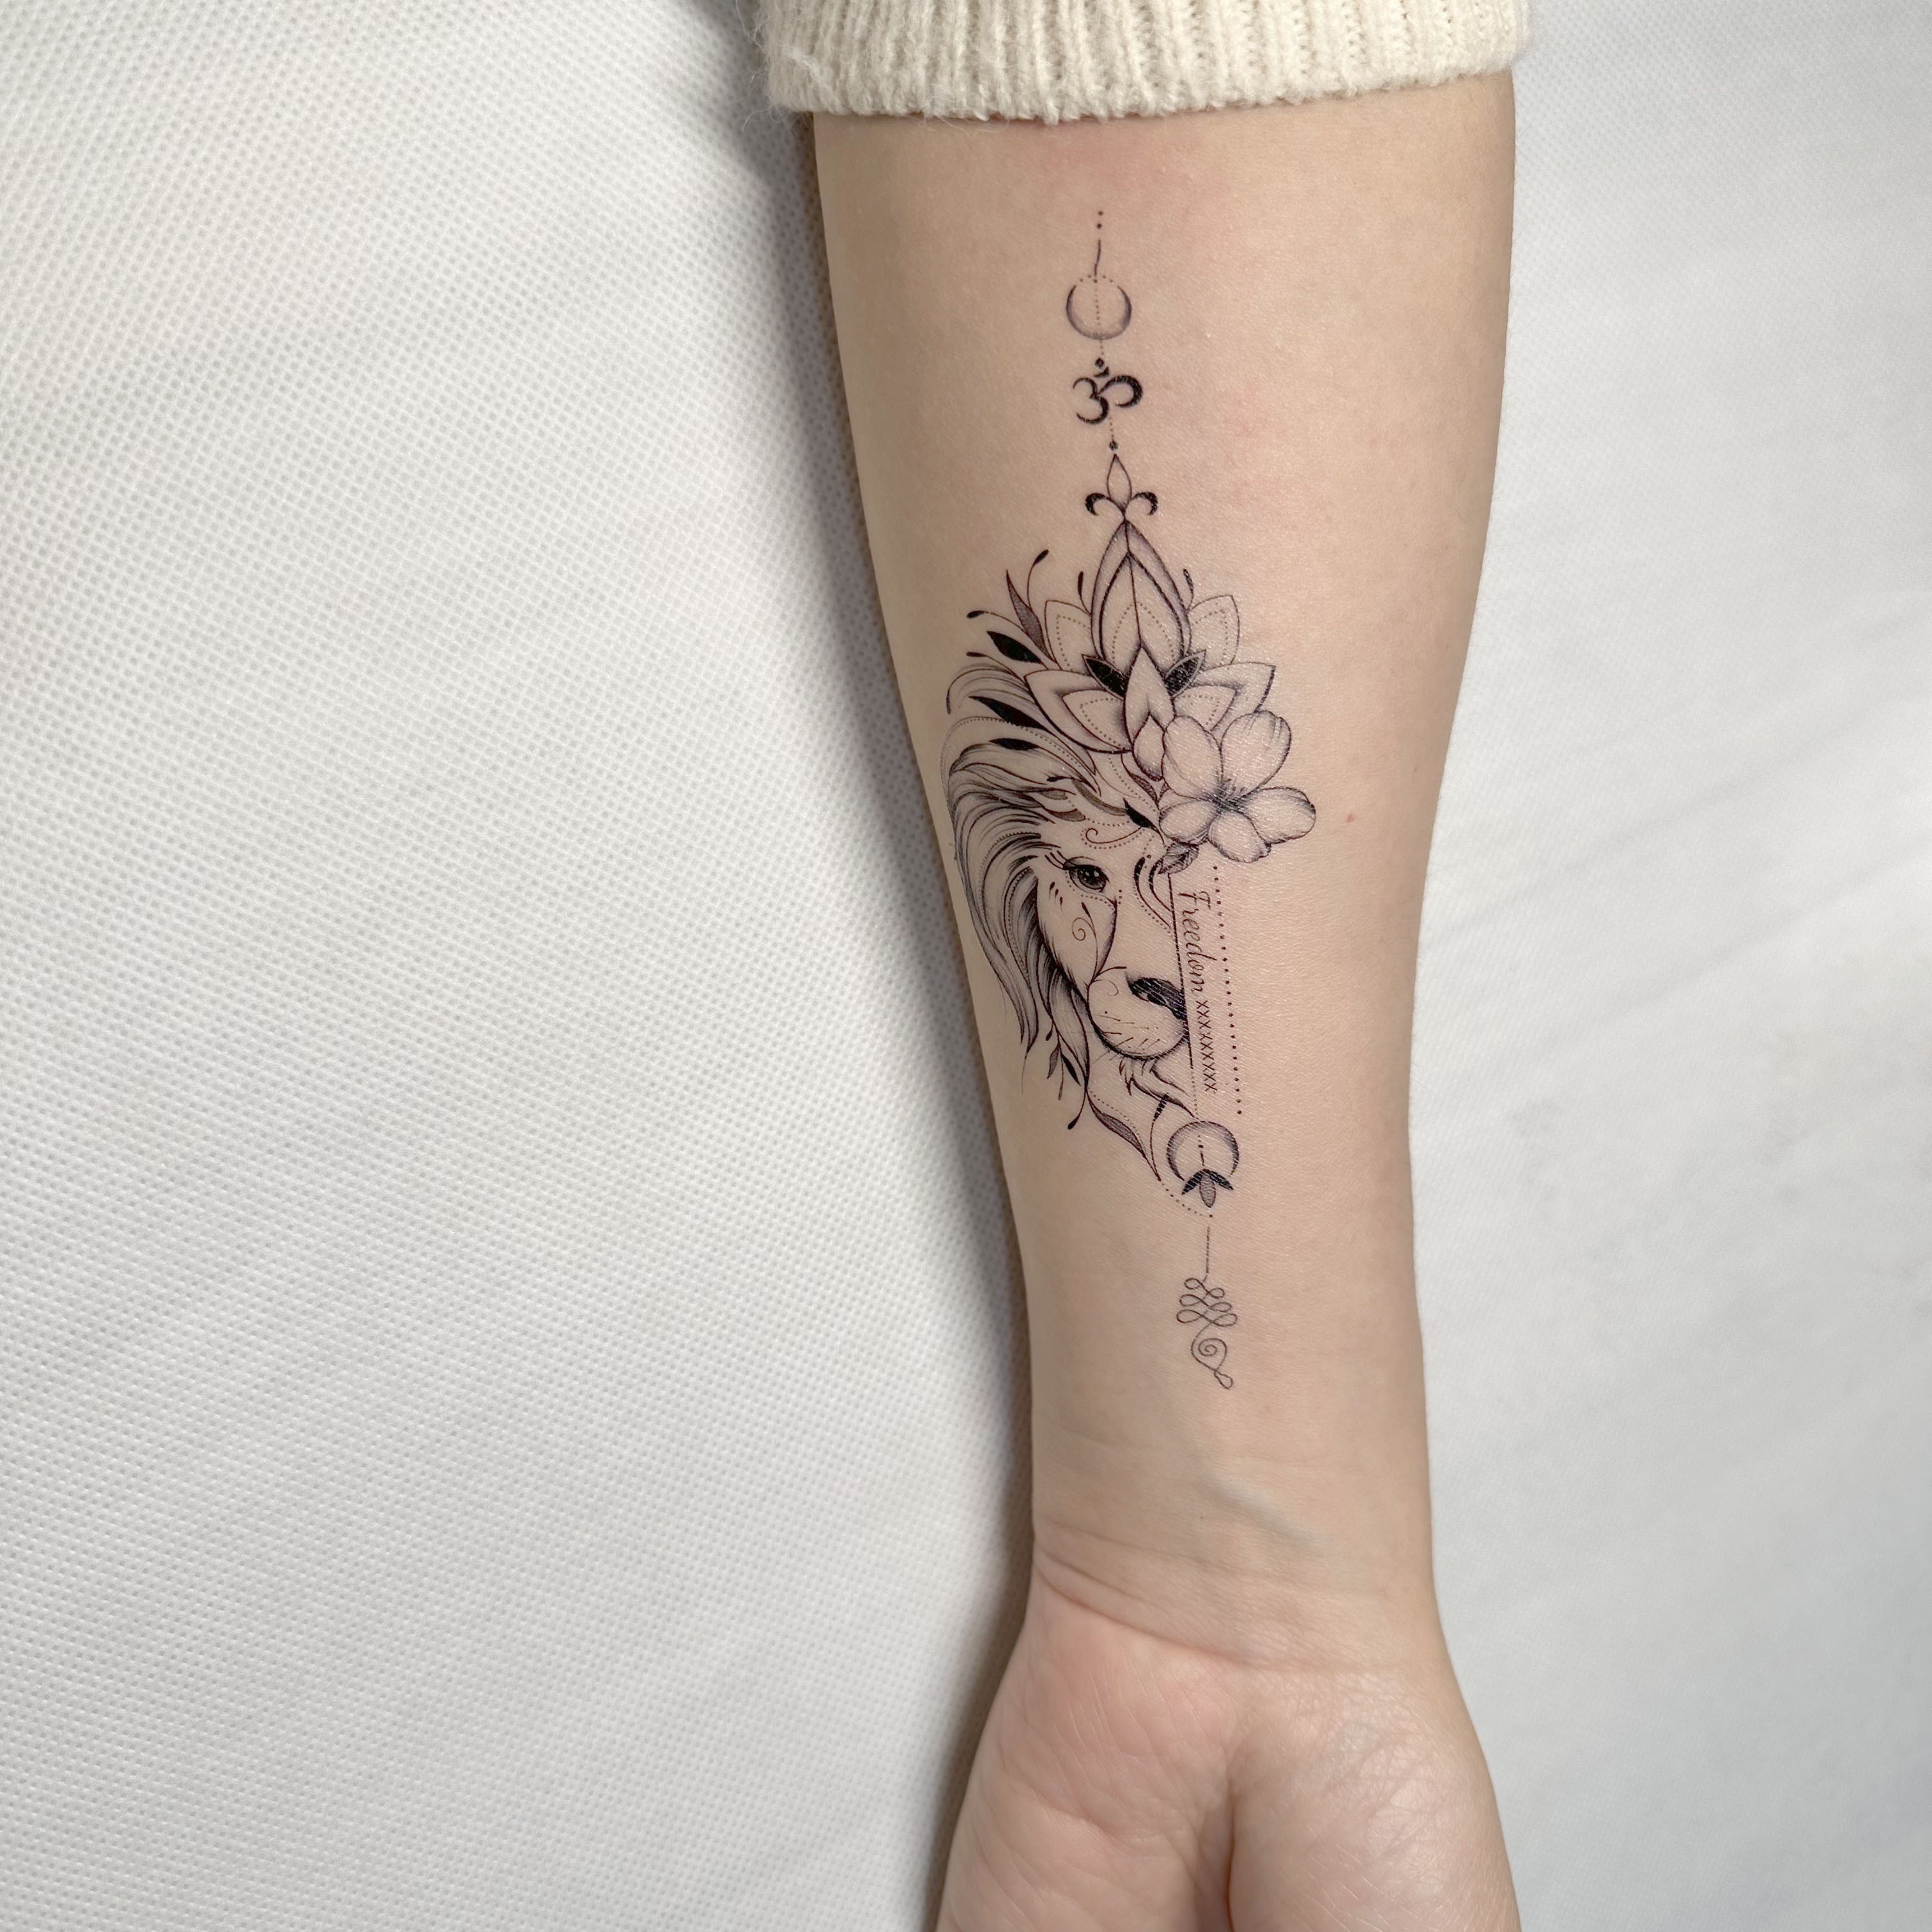 13 Tatuagens Femininas Temporárias Para Mãos Removíveis